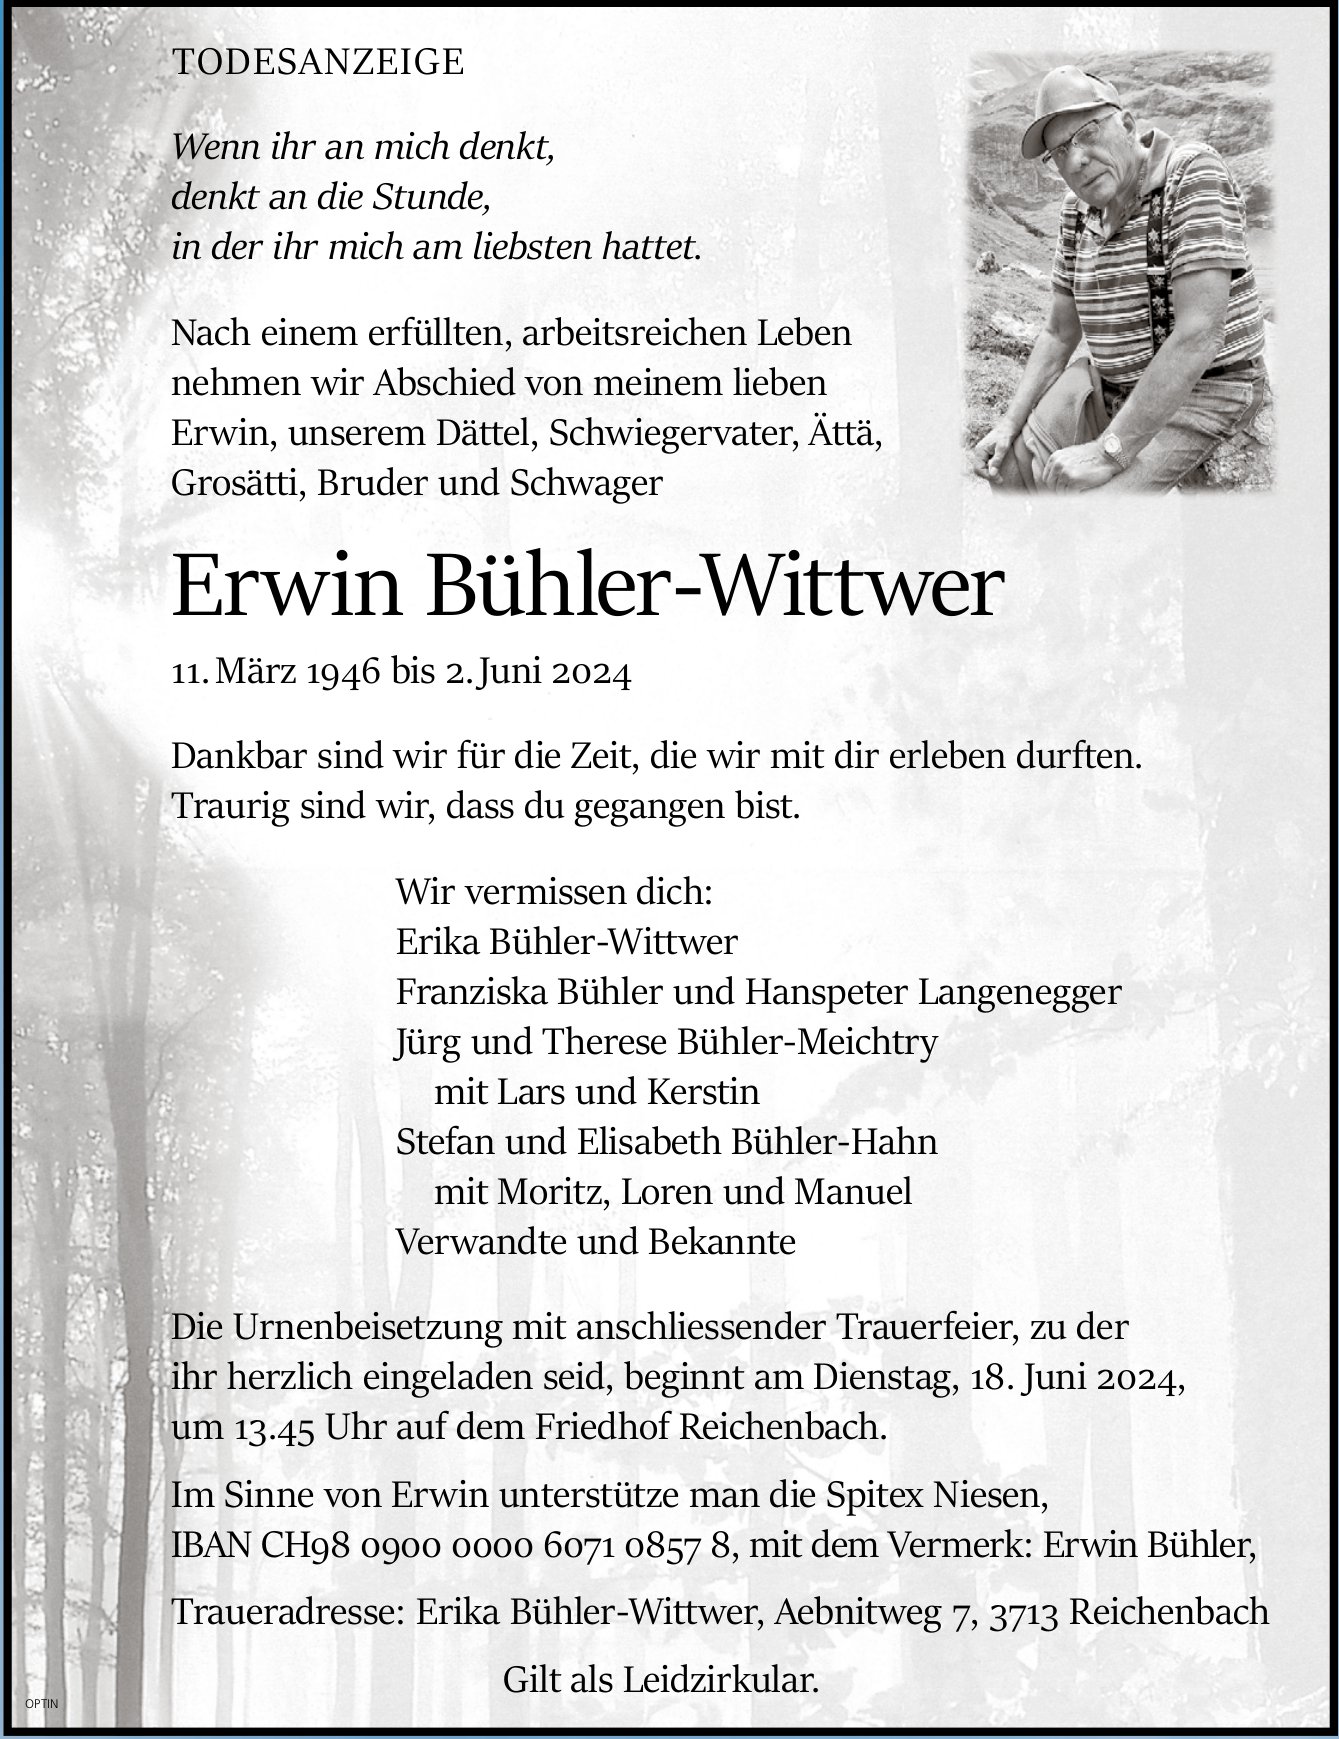 Erwin Bühler-Wittwer, Juni 2024 / TA